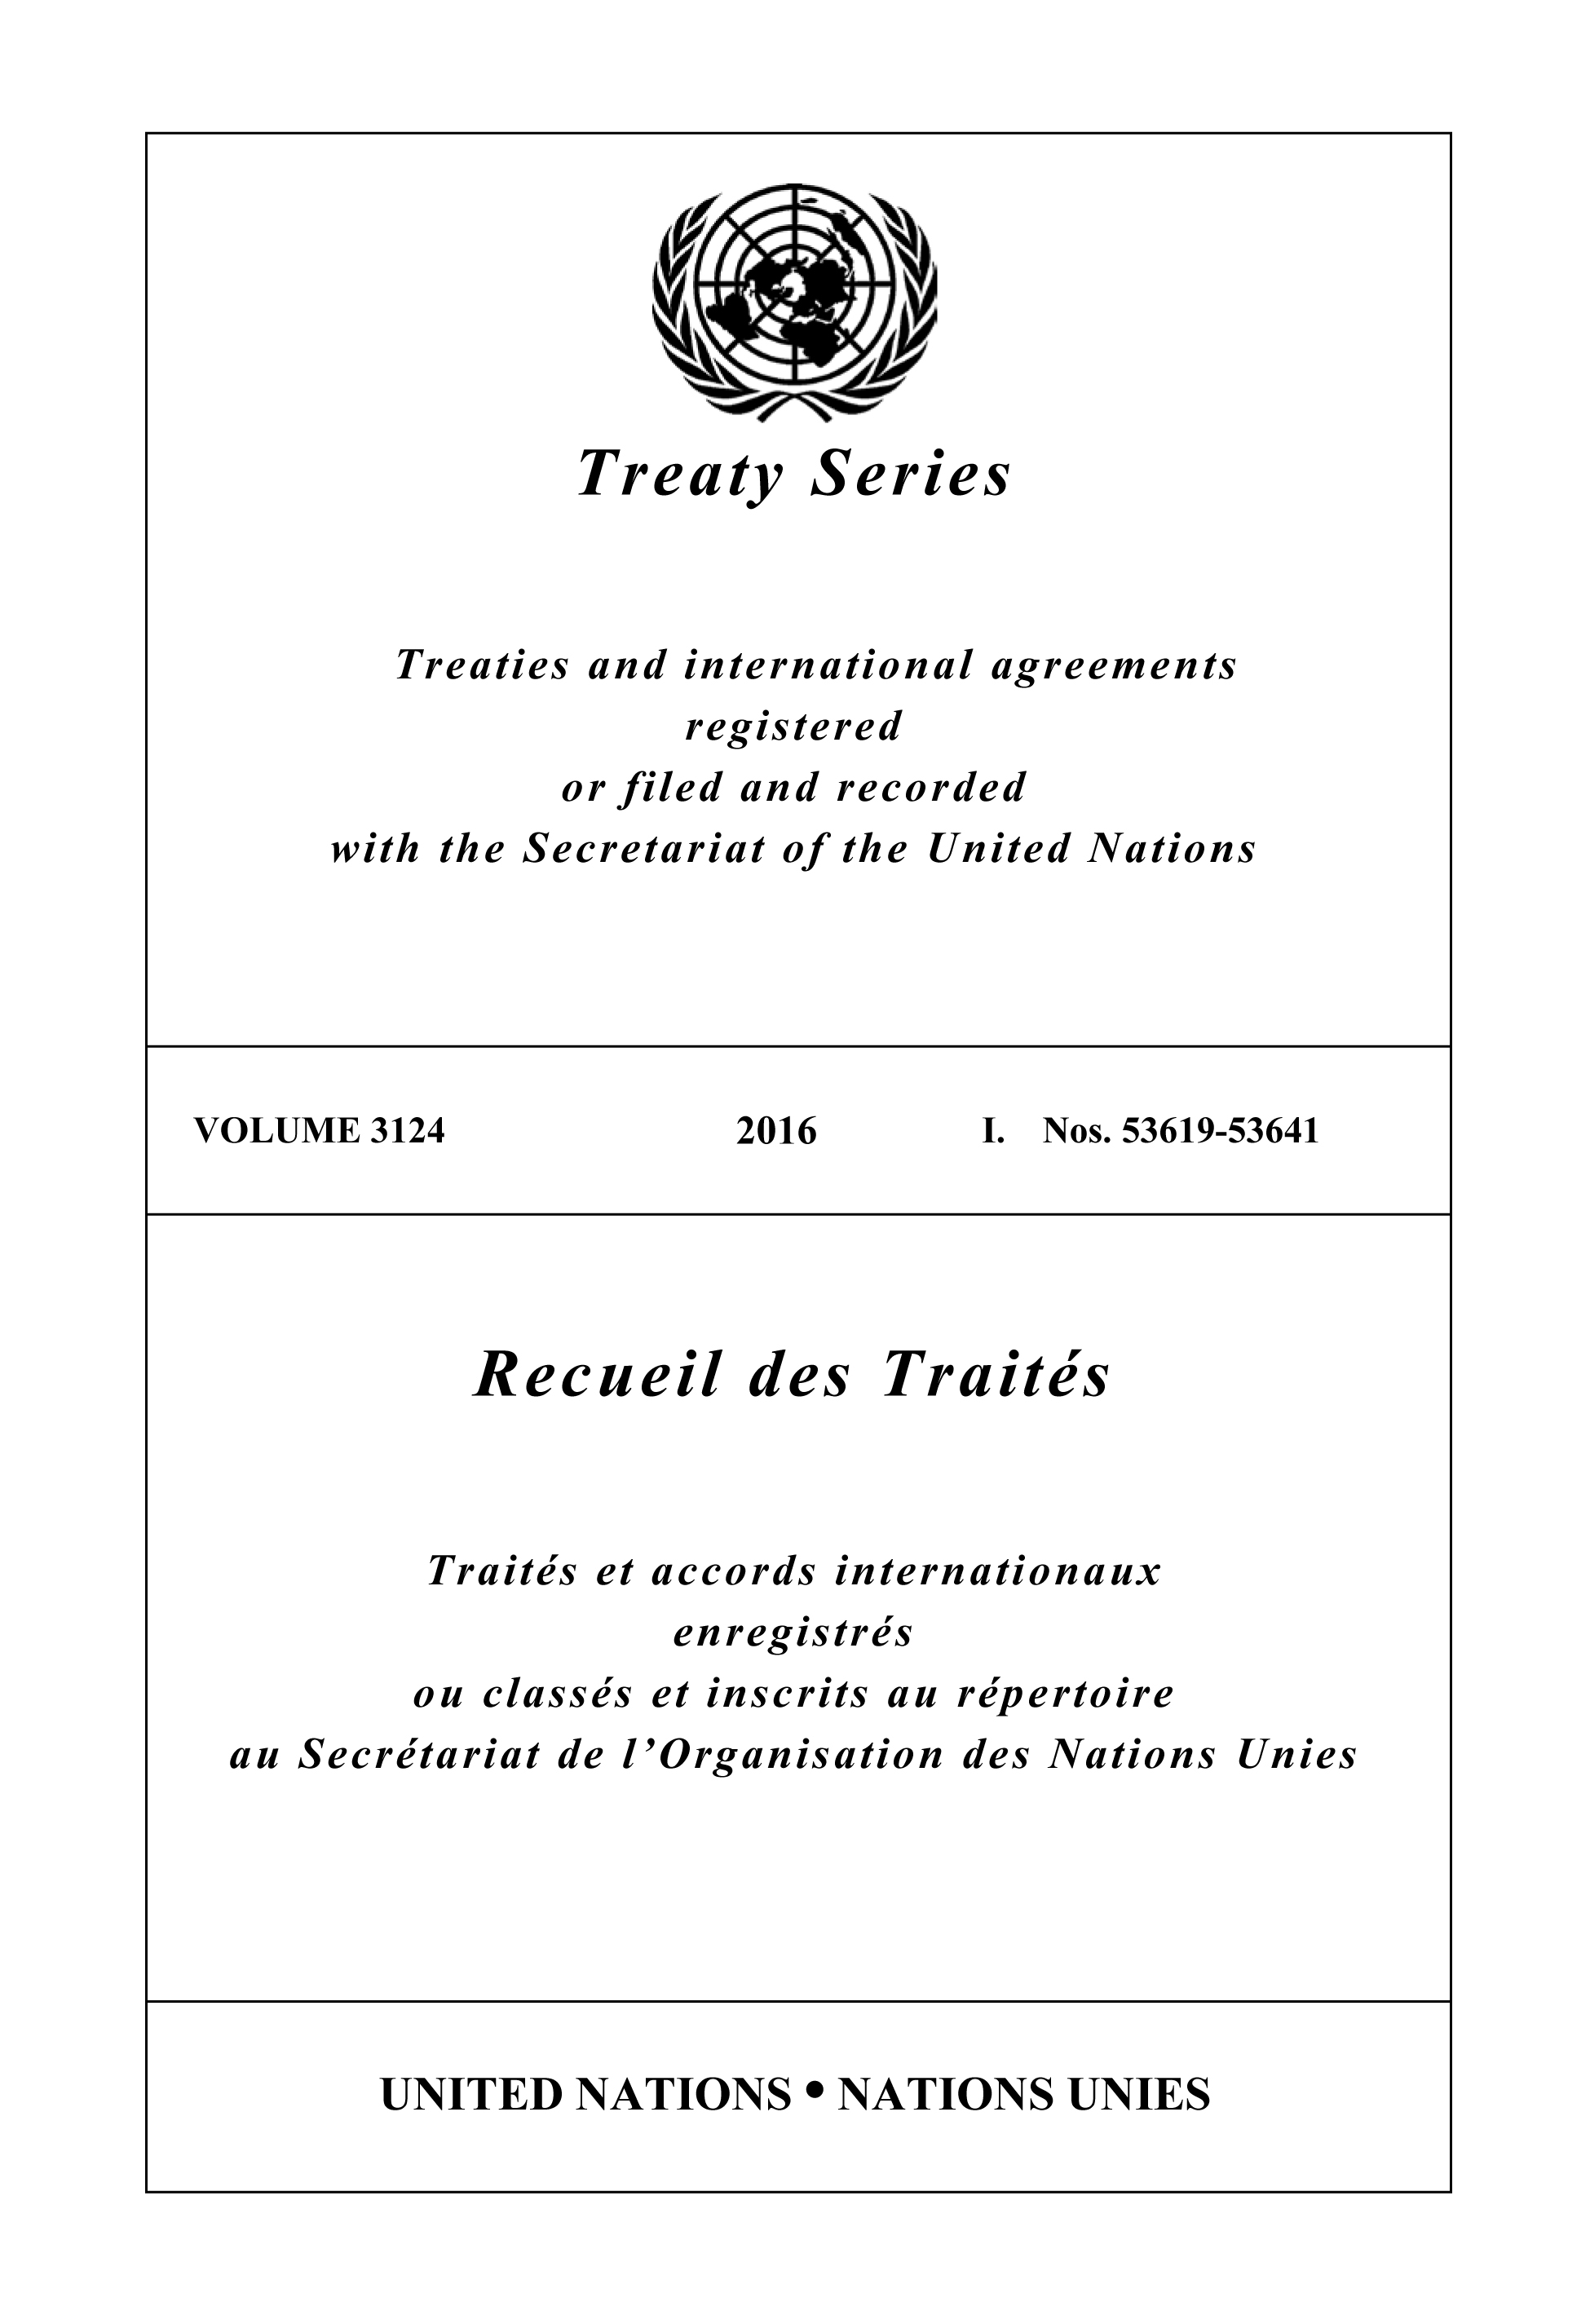 image of Treaty Series 3124